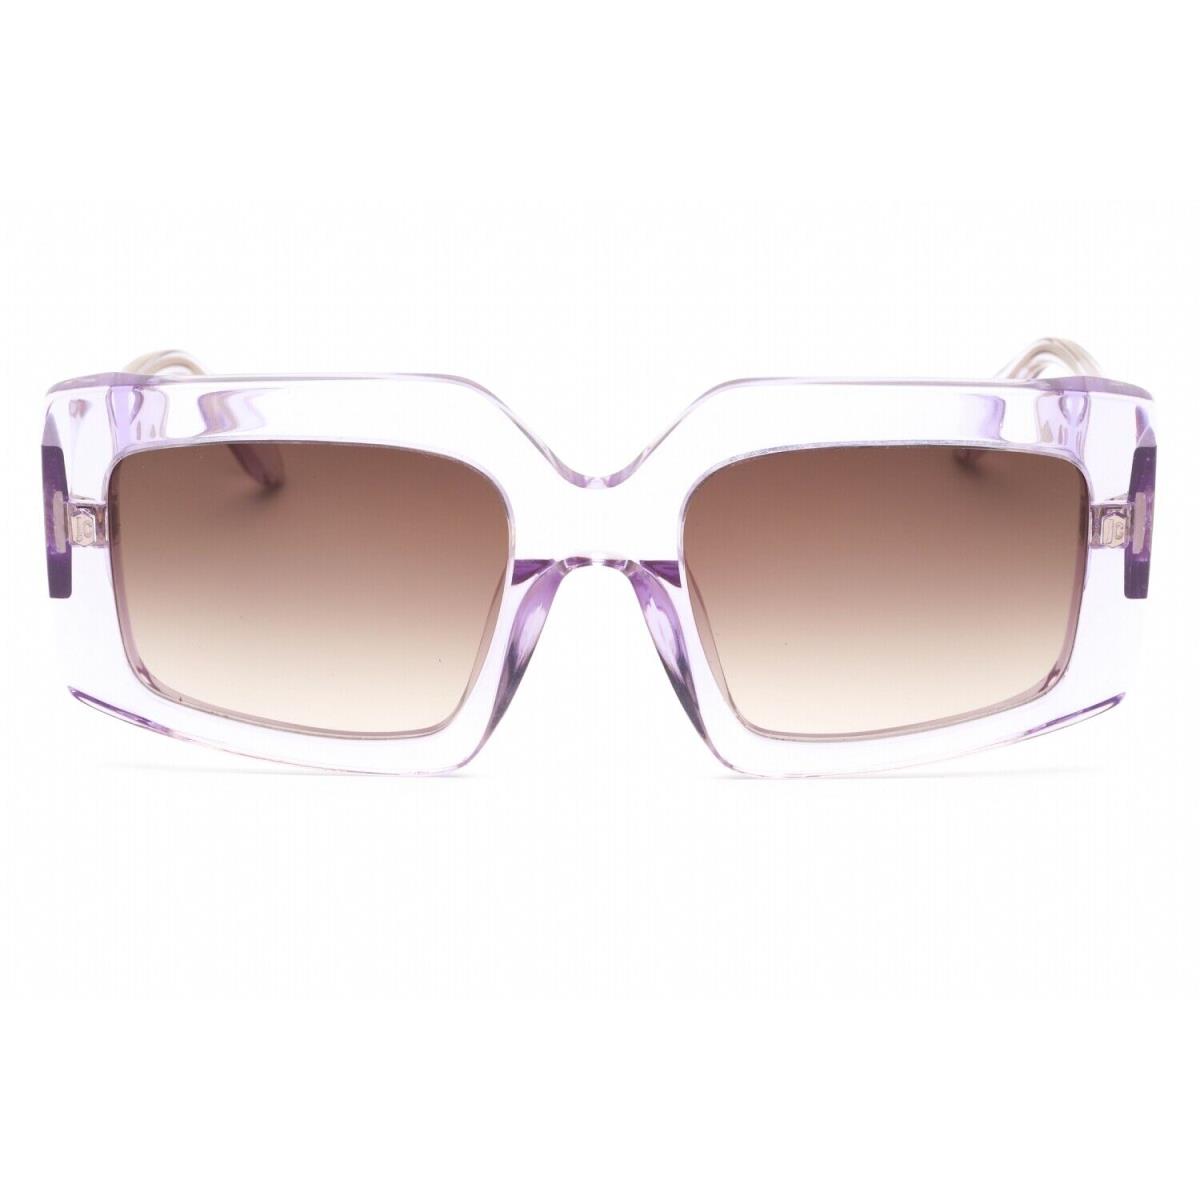 Just Cavalli SJC020V-6SC-54 Sunglasses Size 54mm 140mm 21mm Violet Women